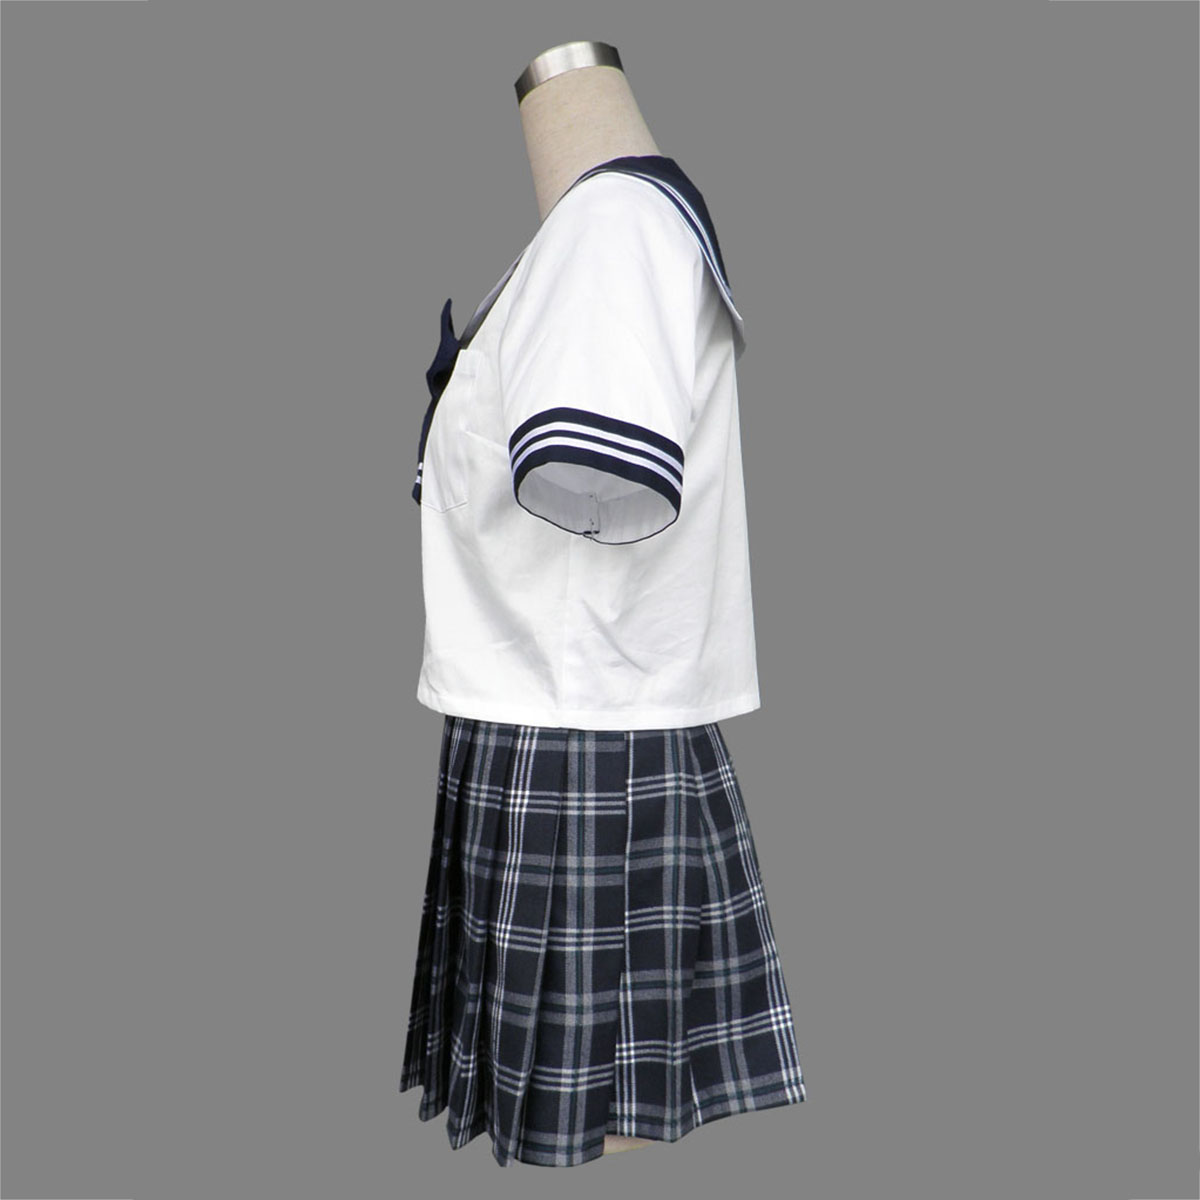 Sailor Uniform 5 Black Grid Cosplay Costumes AU